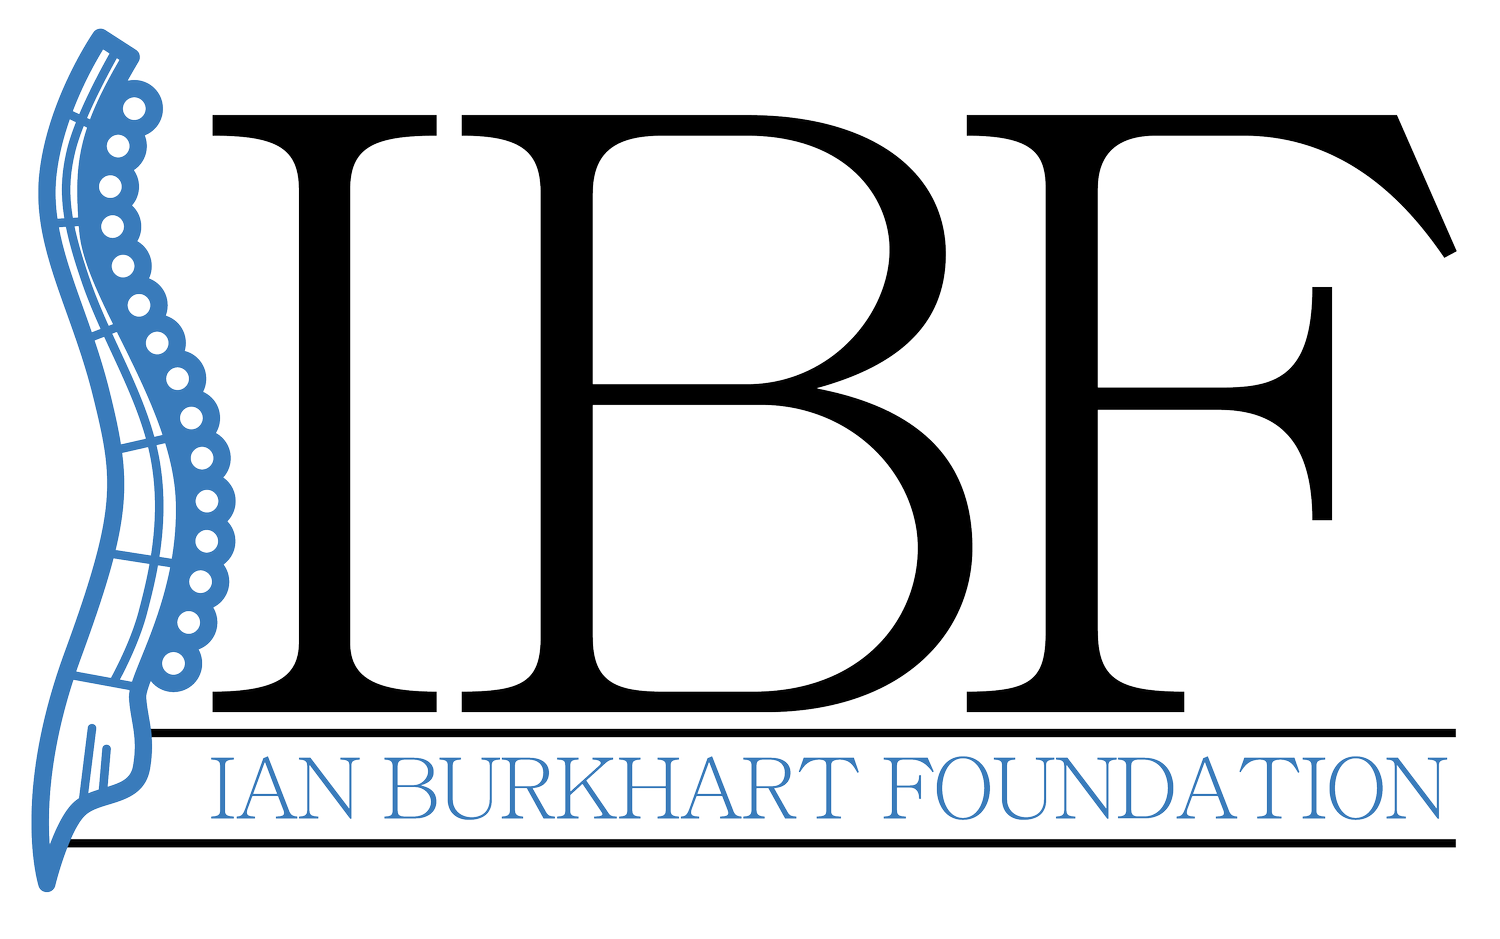 Ian Burkhart Foundation